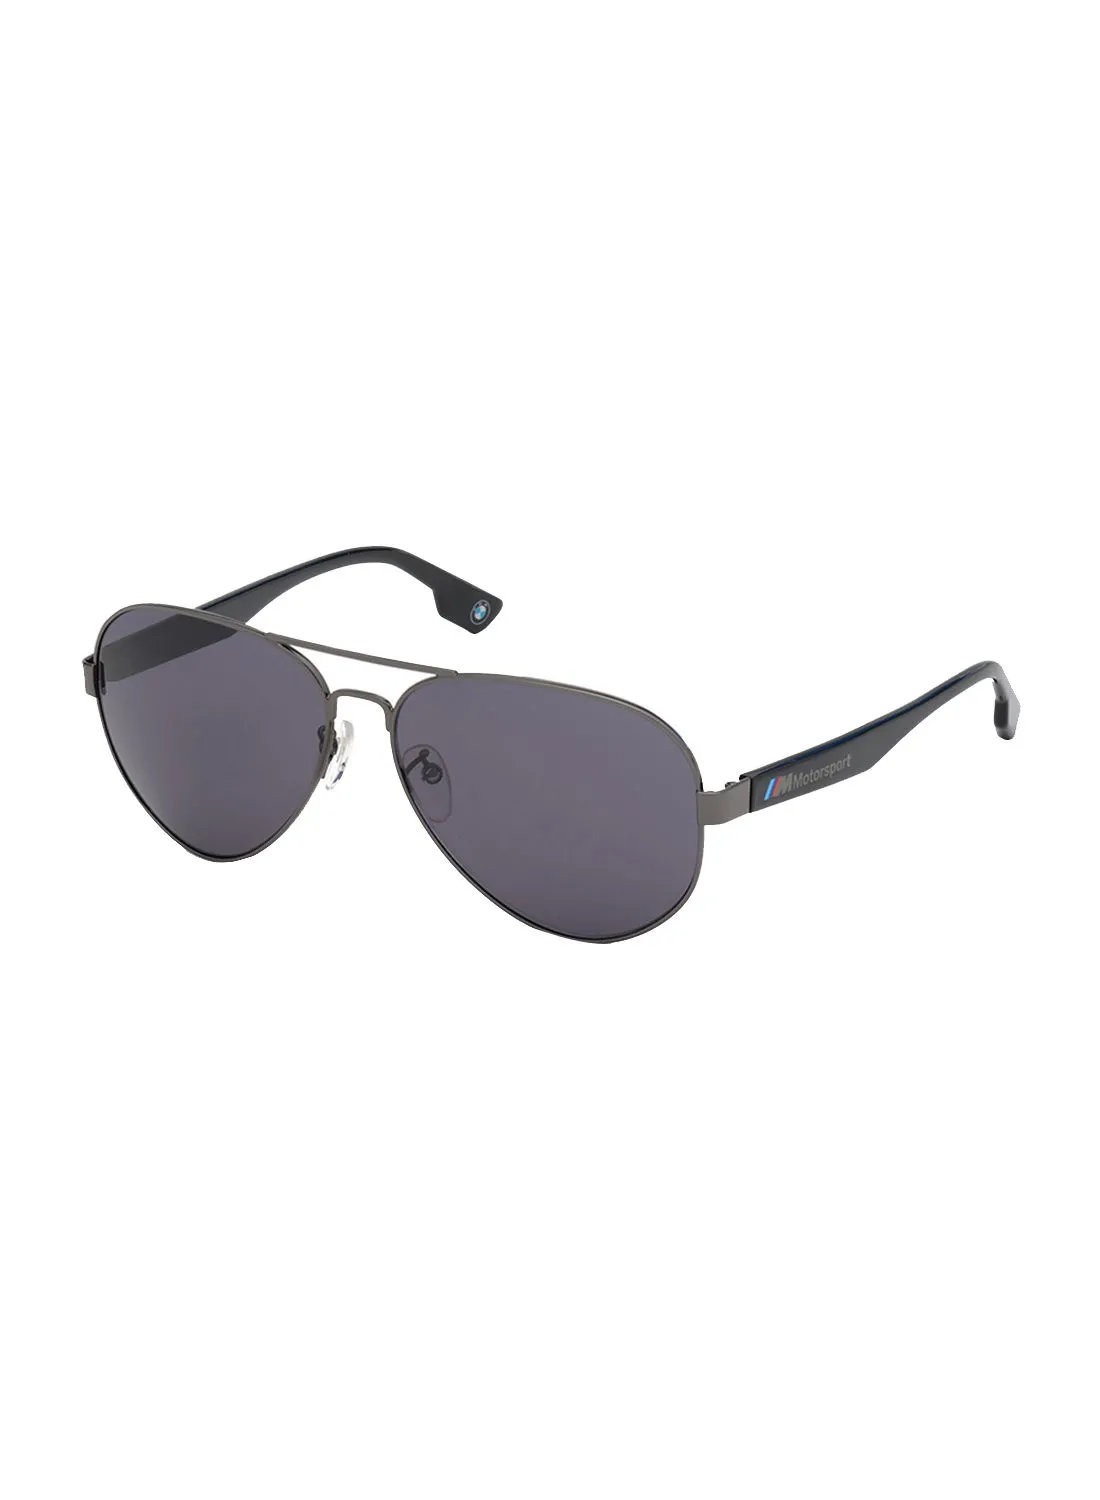 BMW Men's Sunglasses BS000108A60 